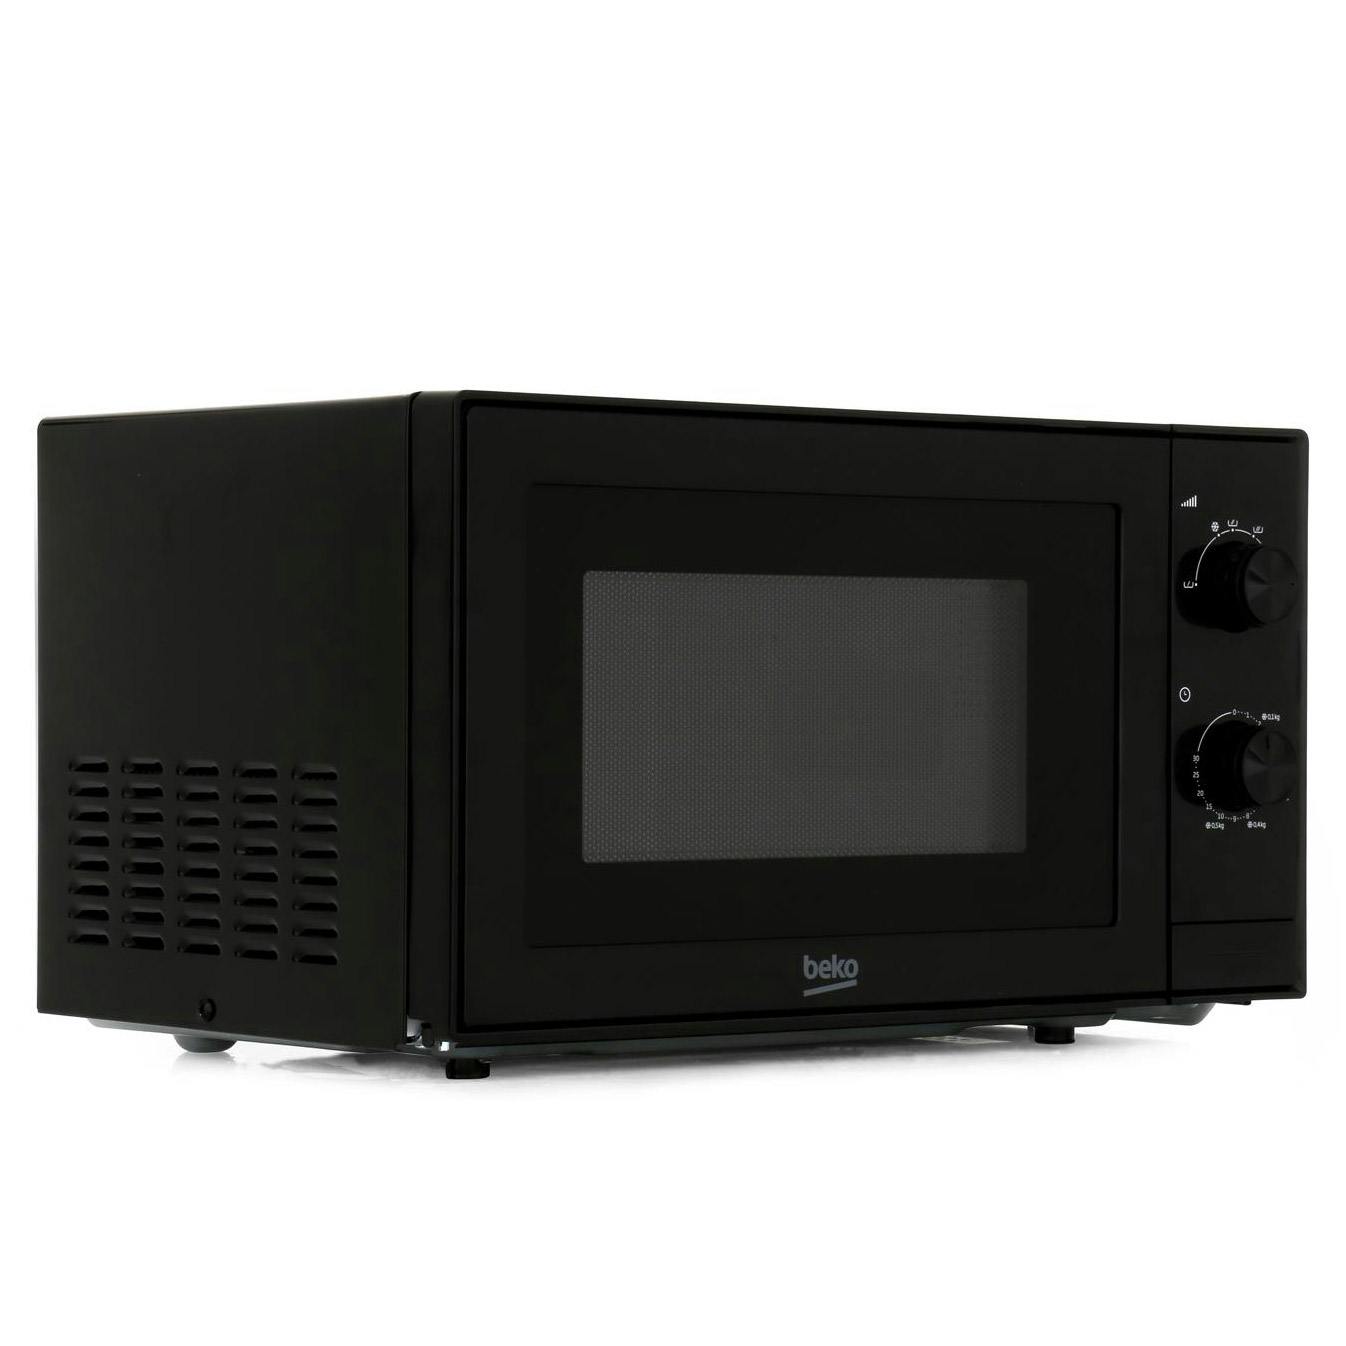 Beko MOC20100B Microwave Oven in Black, 20 Litre 700W